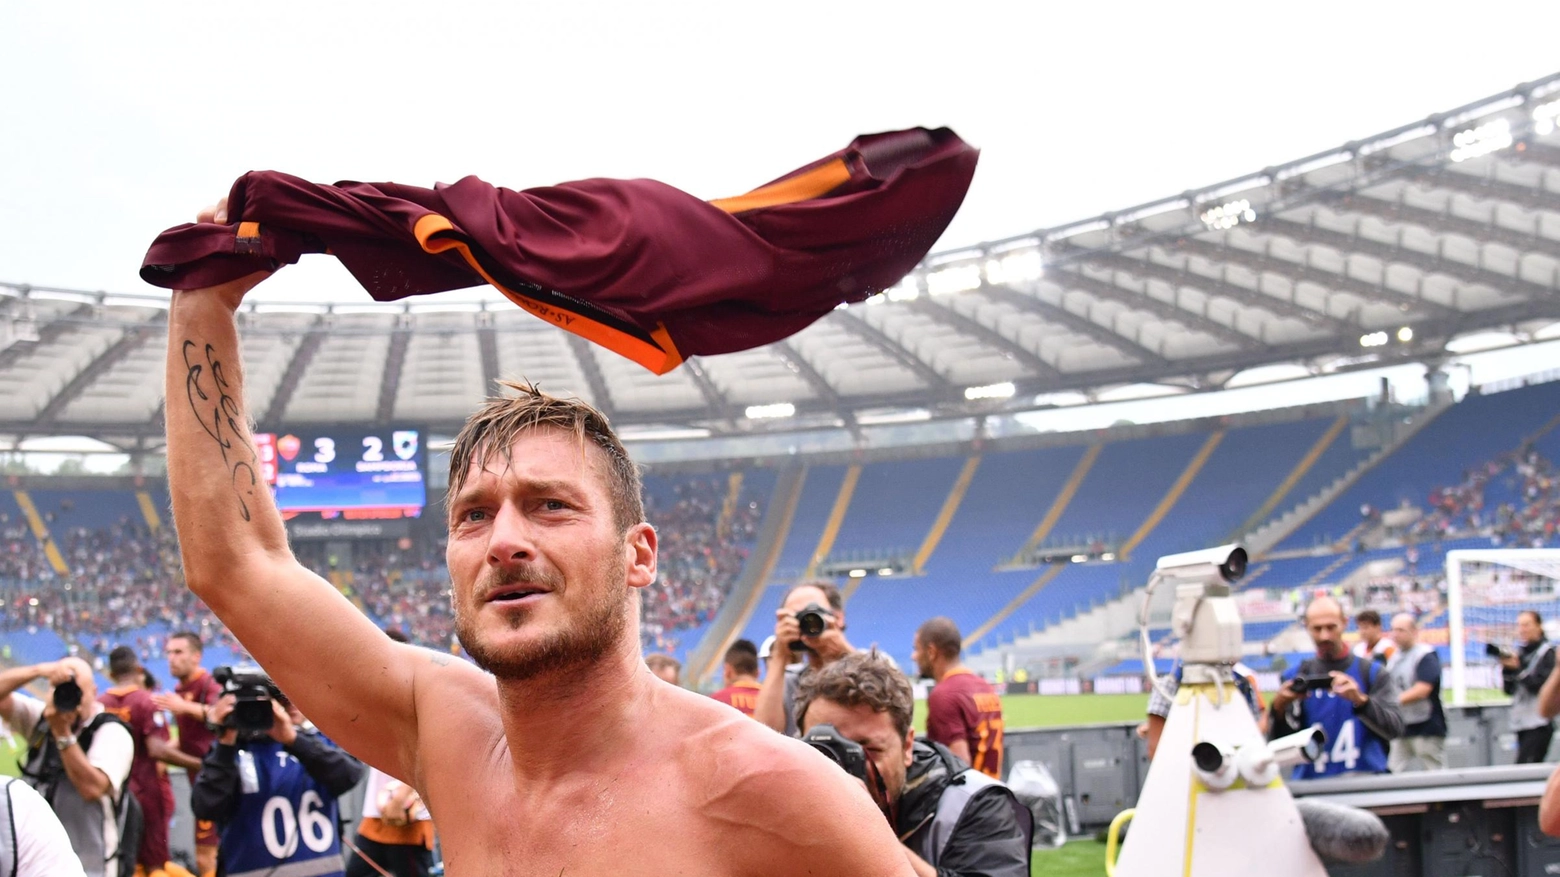 Francesco Totti (La Presse)